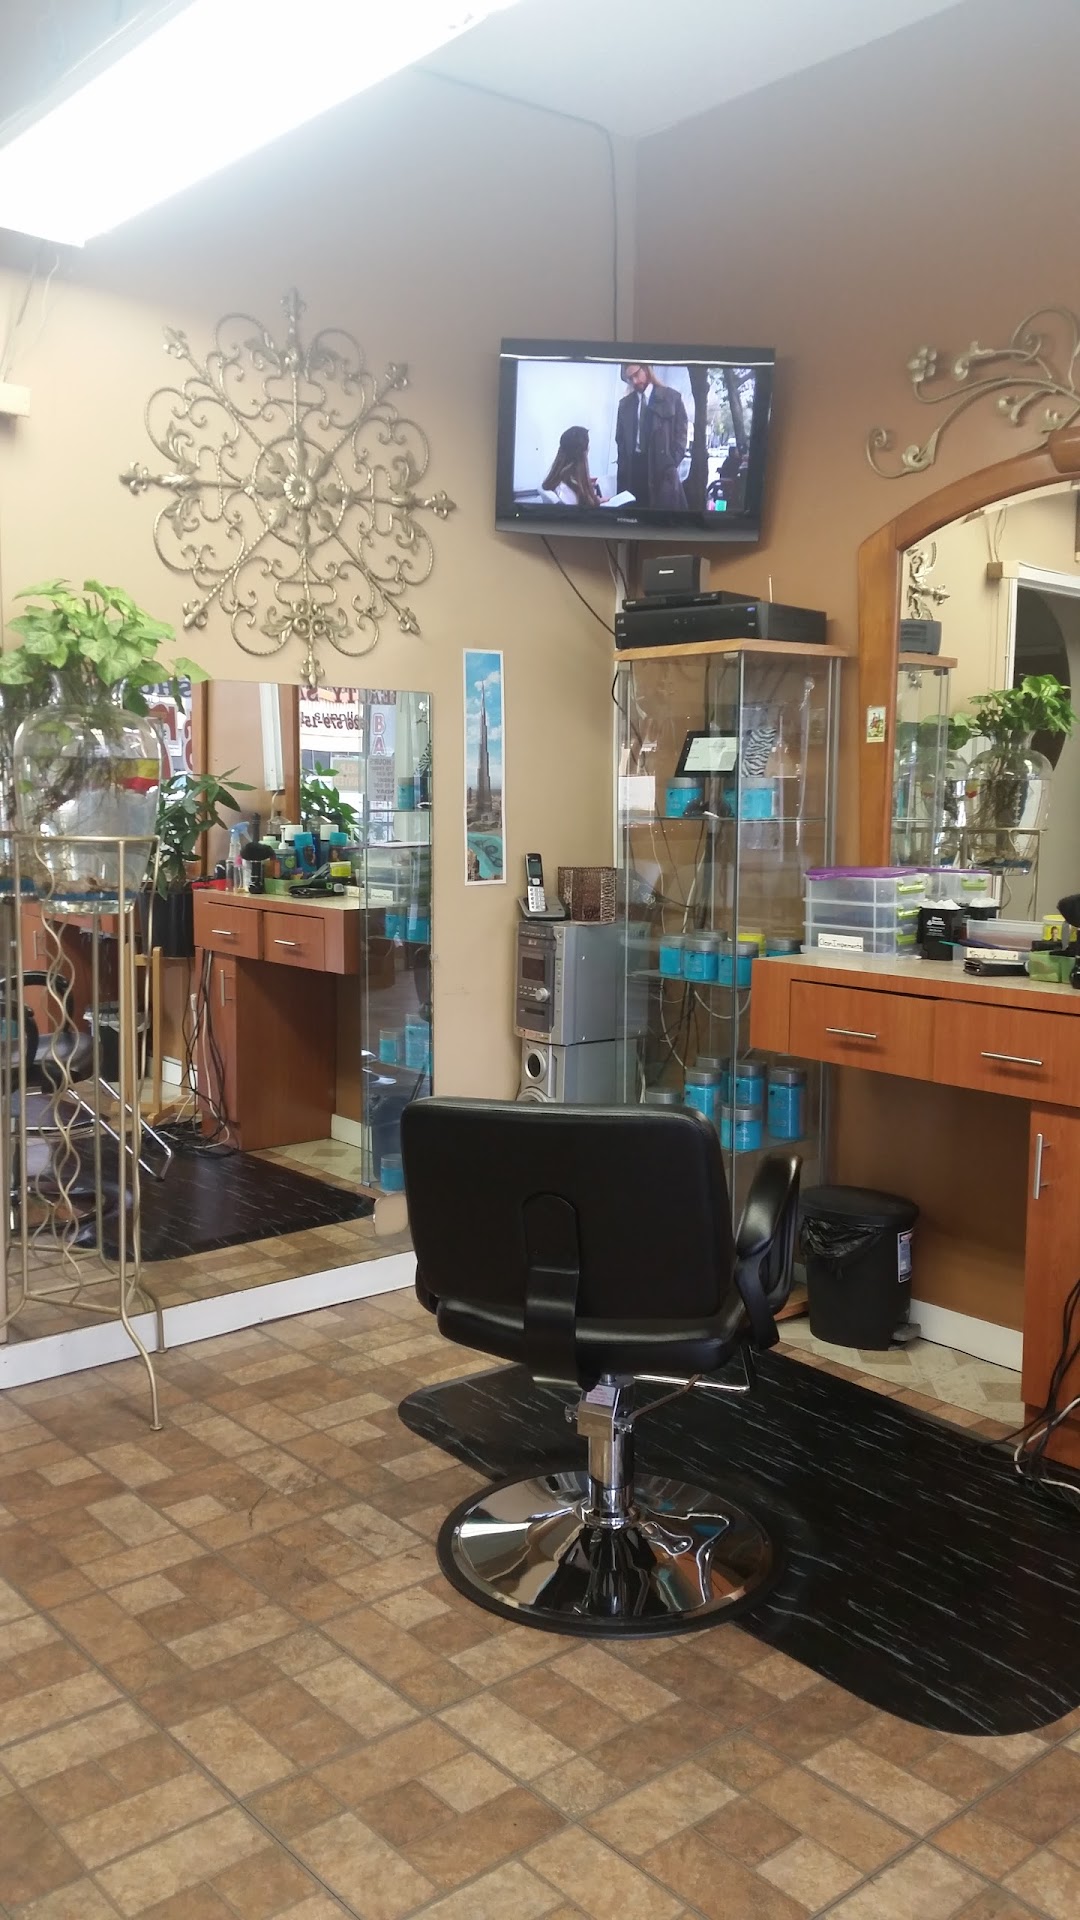 VKS beauty salon and barber shop